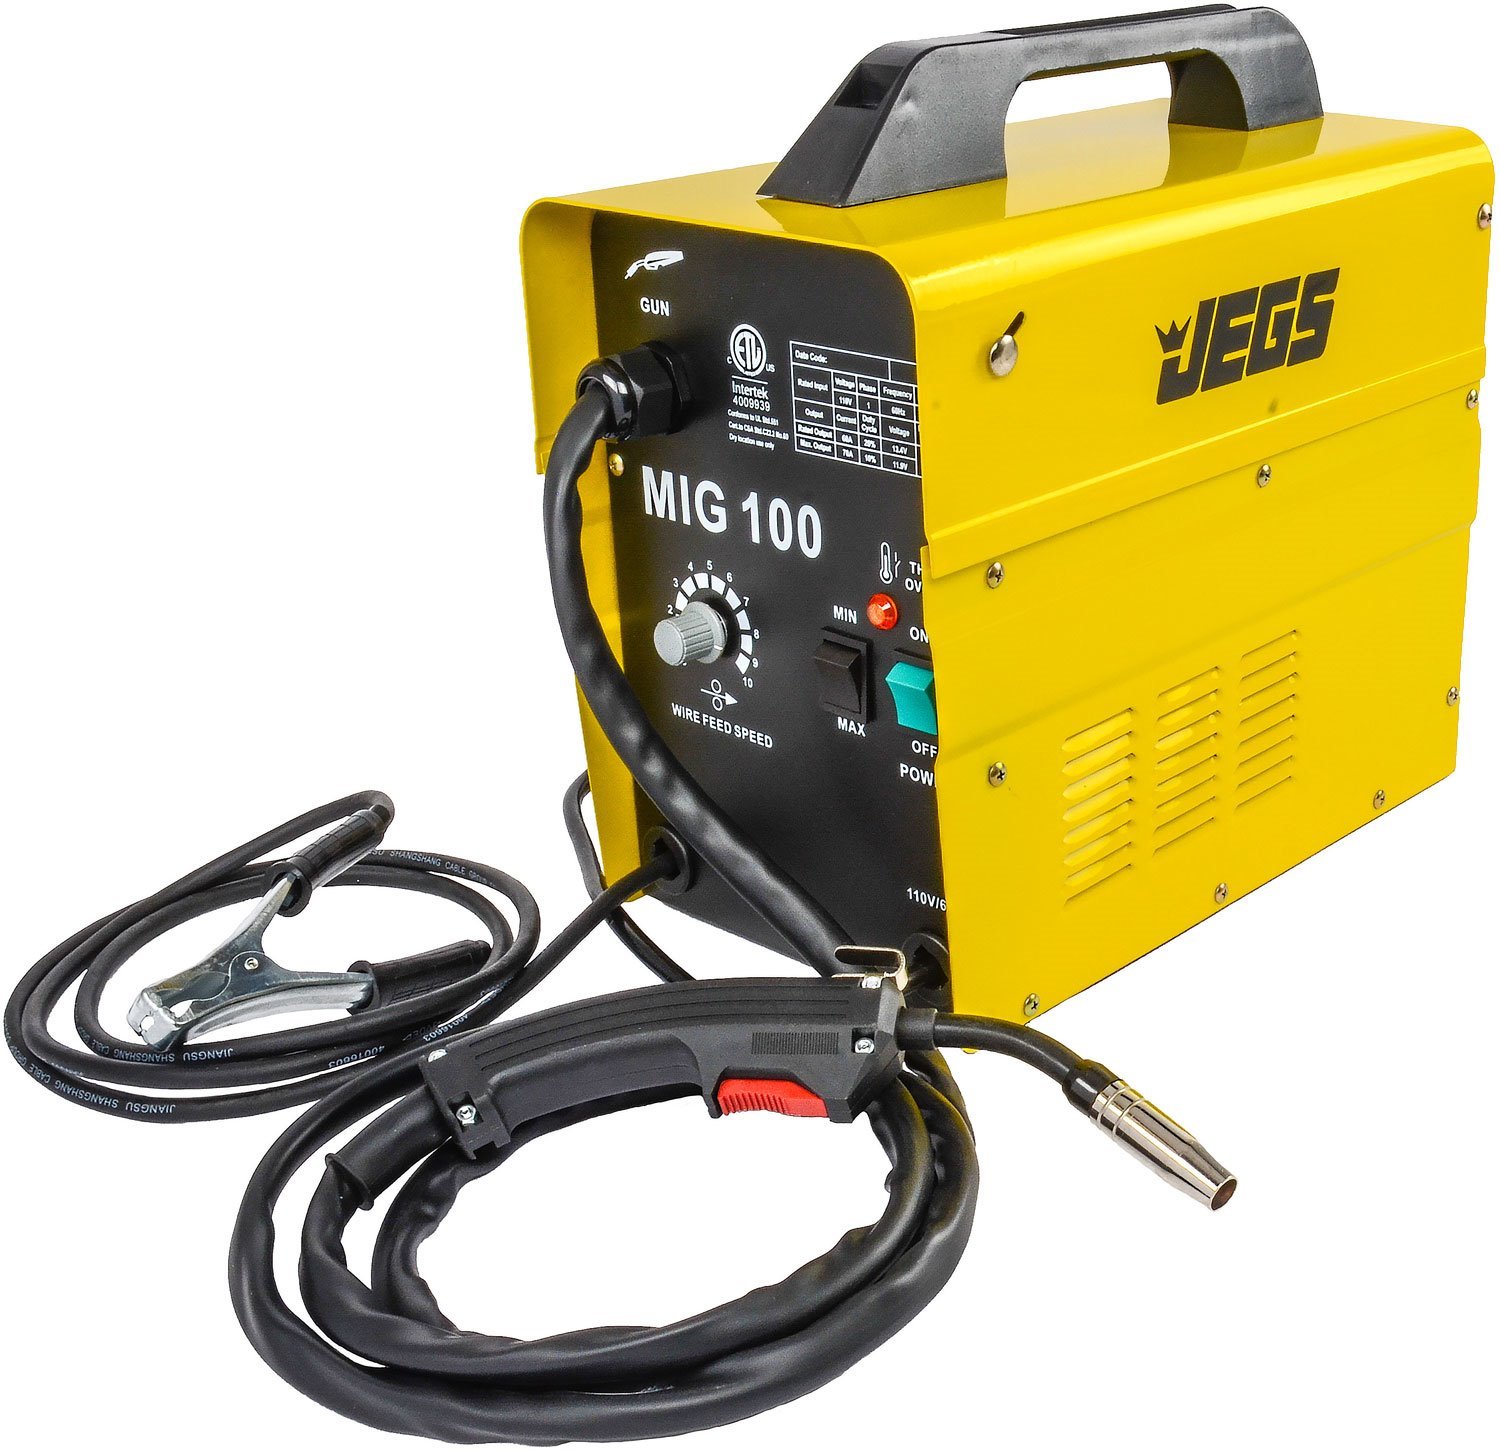 Wire Welder | Buy a Gasless MIG 100 Welder 110V AC - JEGS